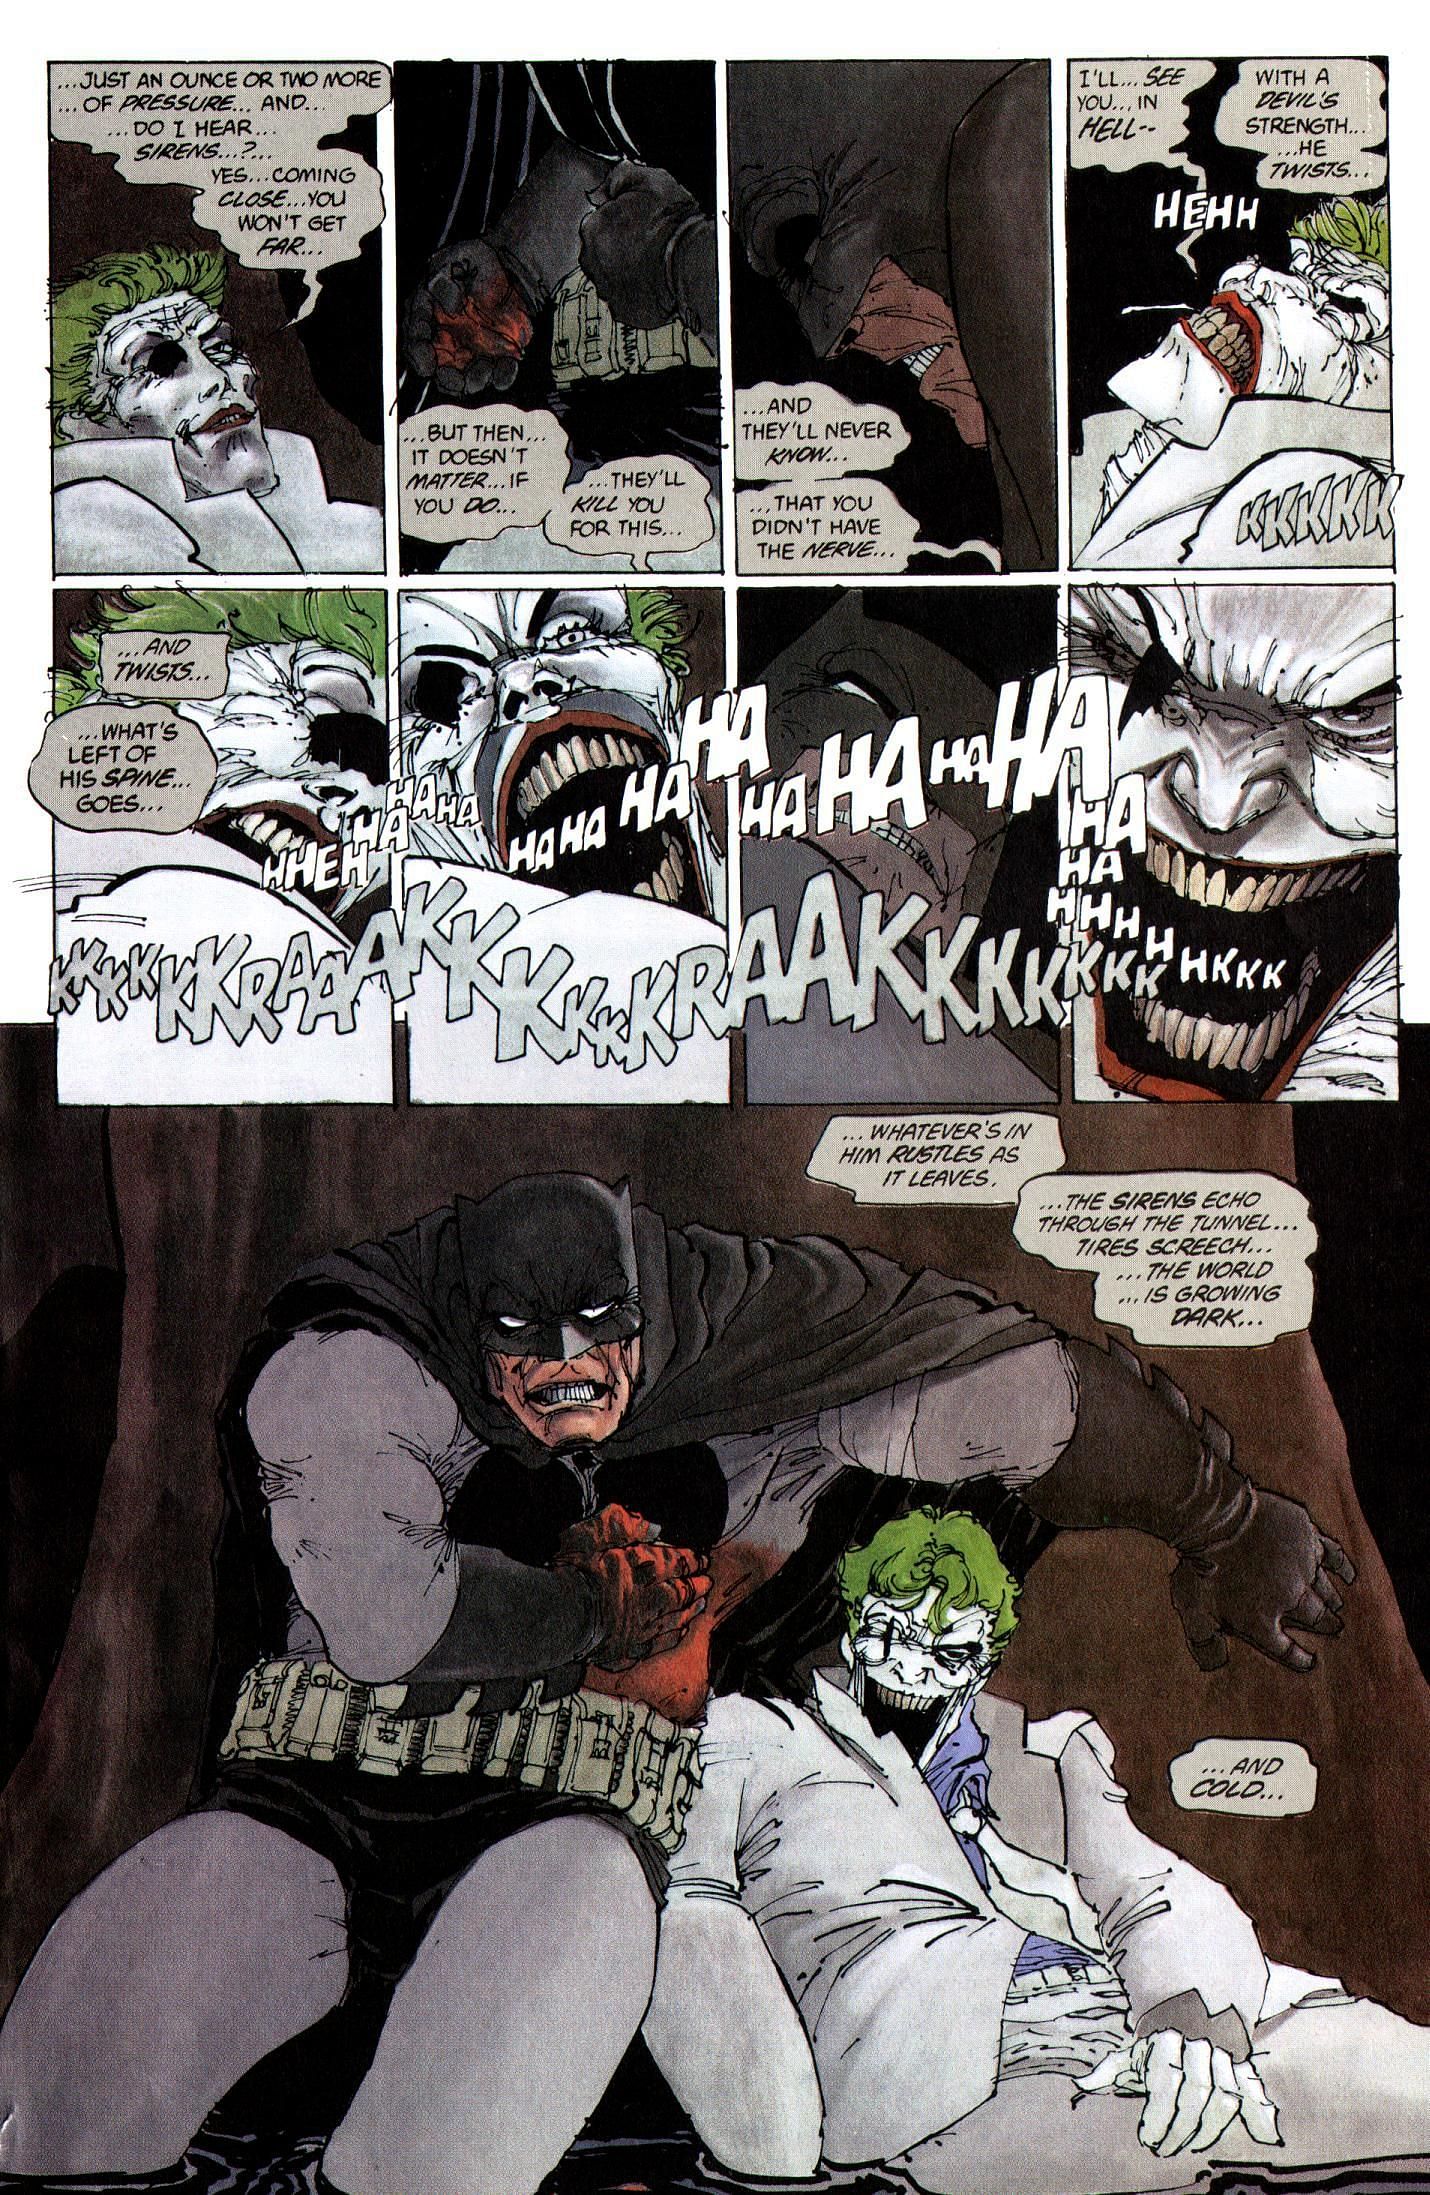 Batman injured over Joker&#039;s Dead Body (Image via DC Comics)